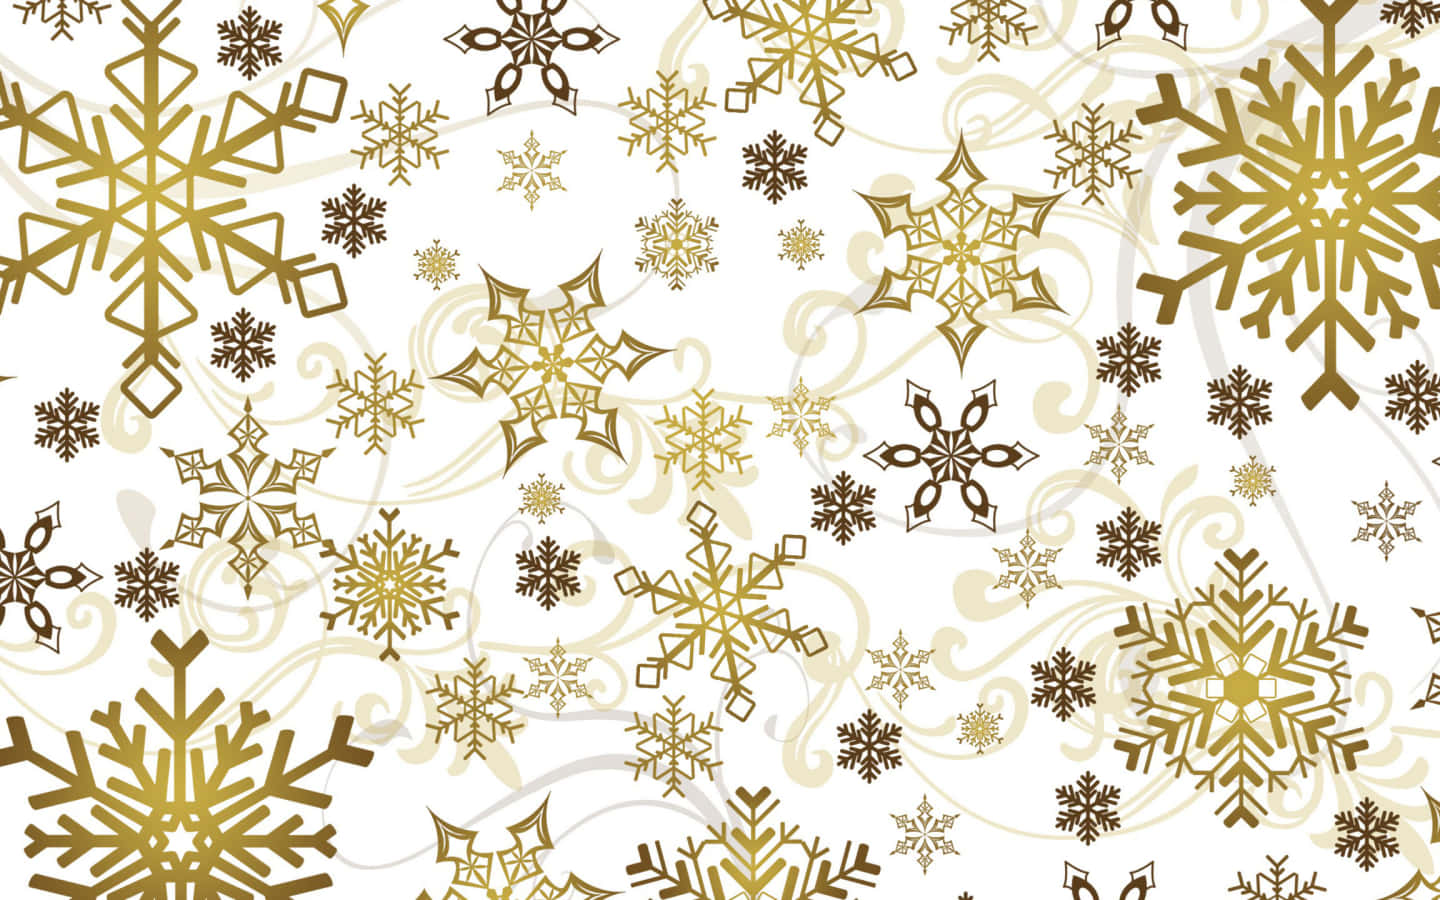 A winter wonderland scene - snowflakes falling down a winter sky